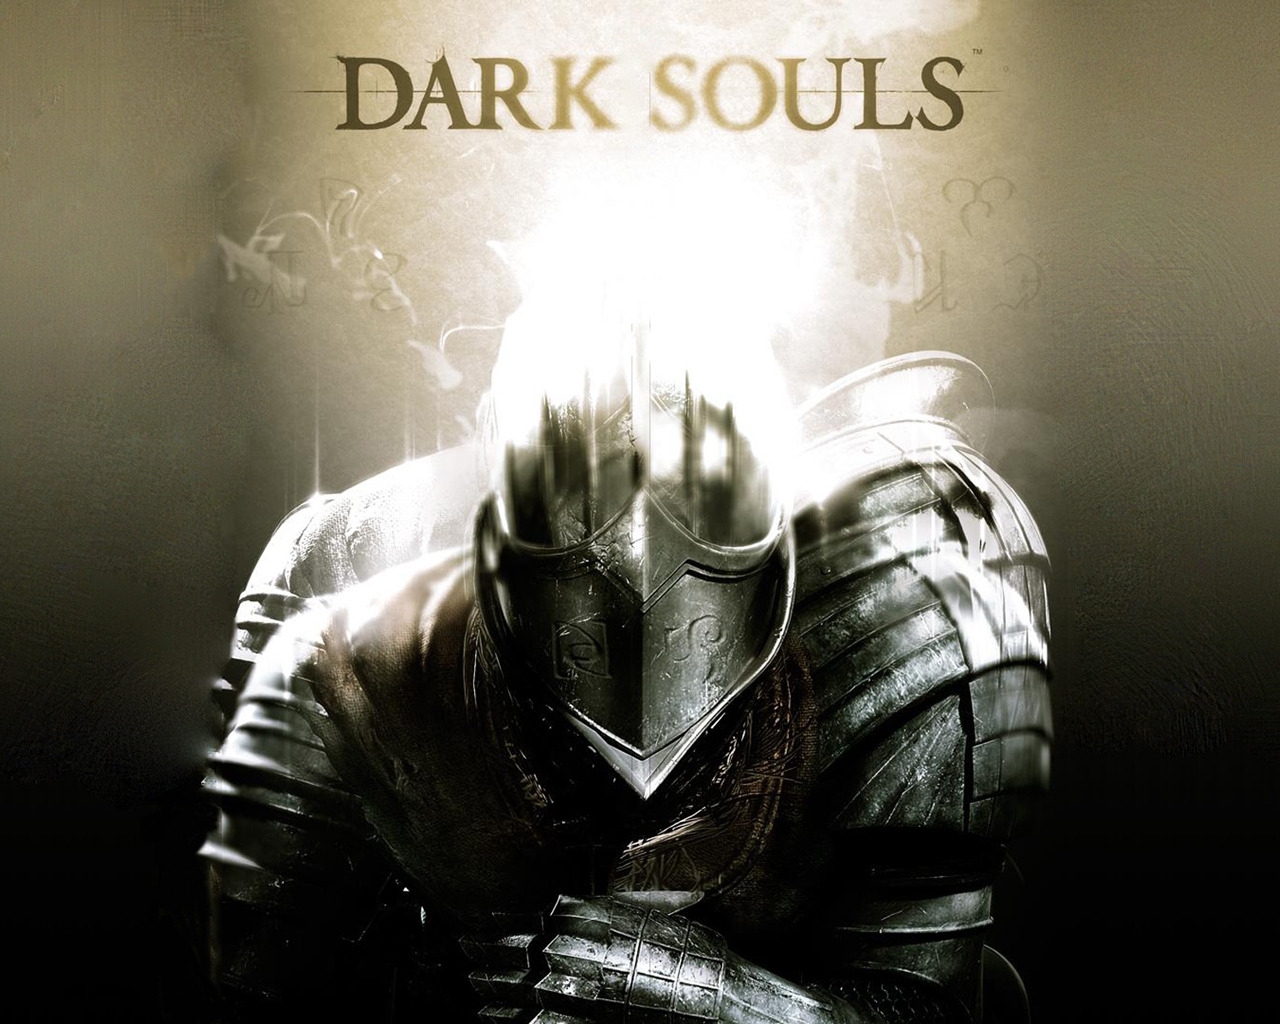 Dark Souls Poster for 1280 x 1024 resolution